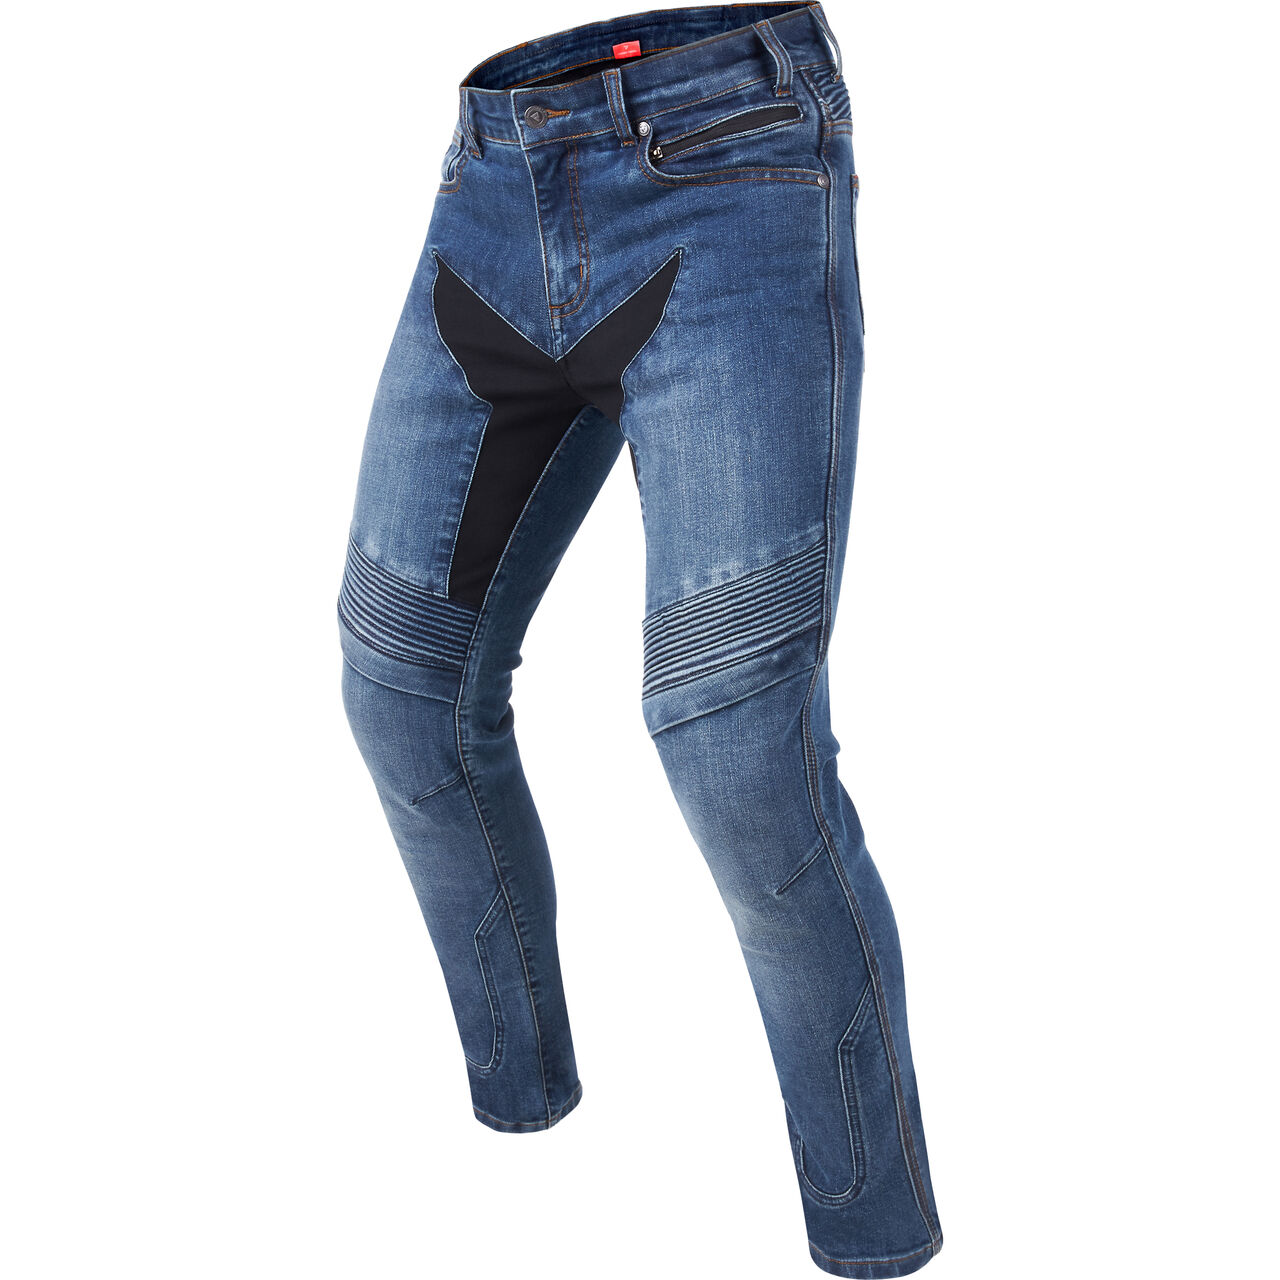 Eagle III Slim Fit jeans pants washed blue